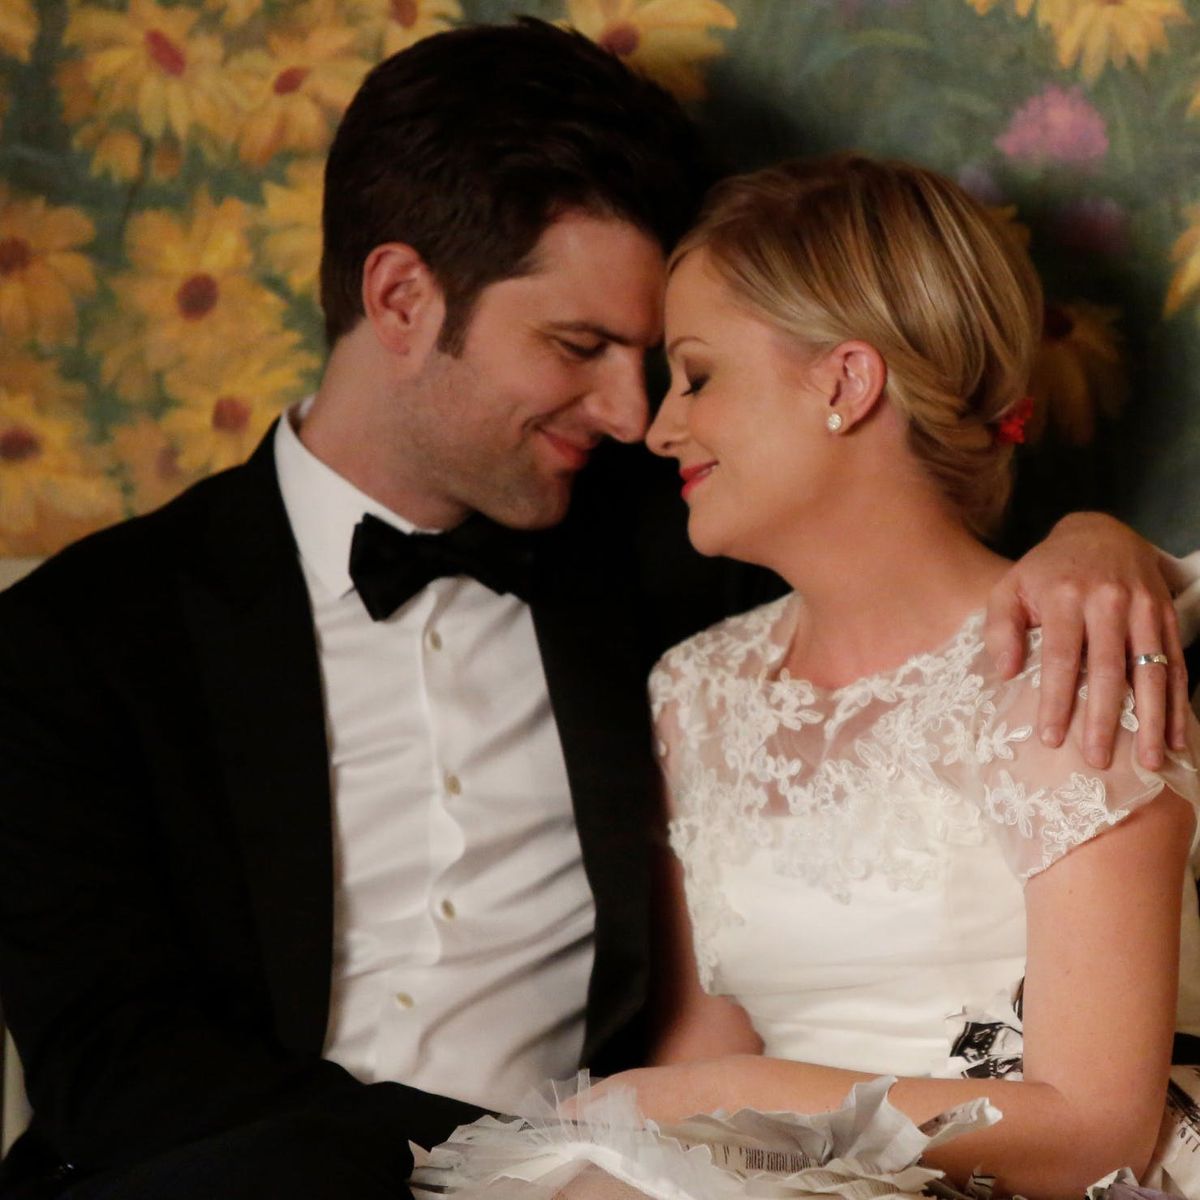 14 TV Weddings That Will Make You Believe in True Love